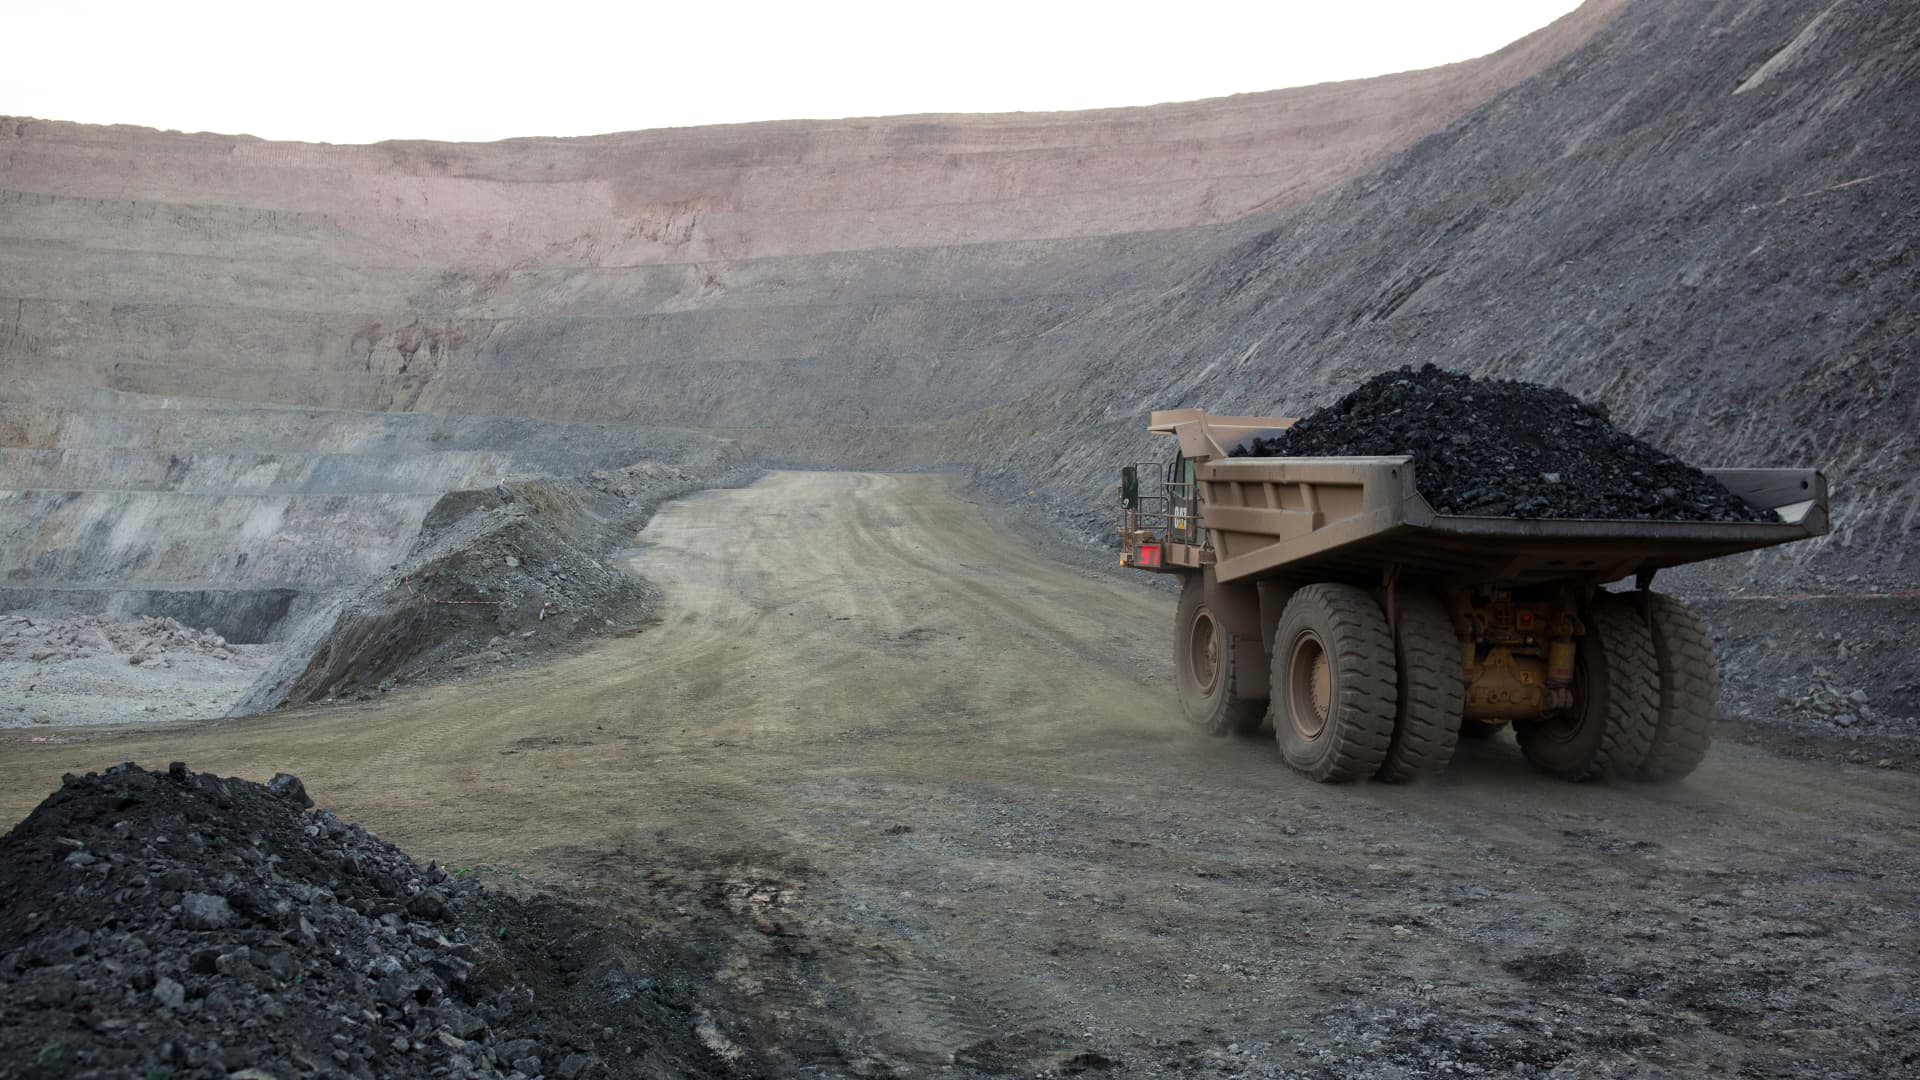 Shares of mining company will rally 50%, analyst says